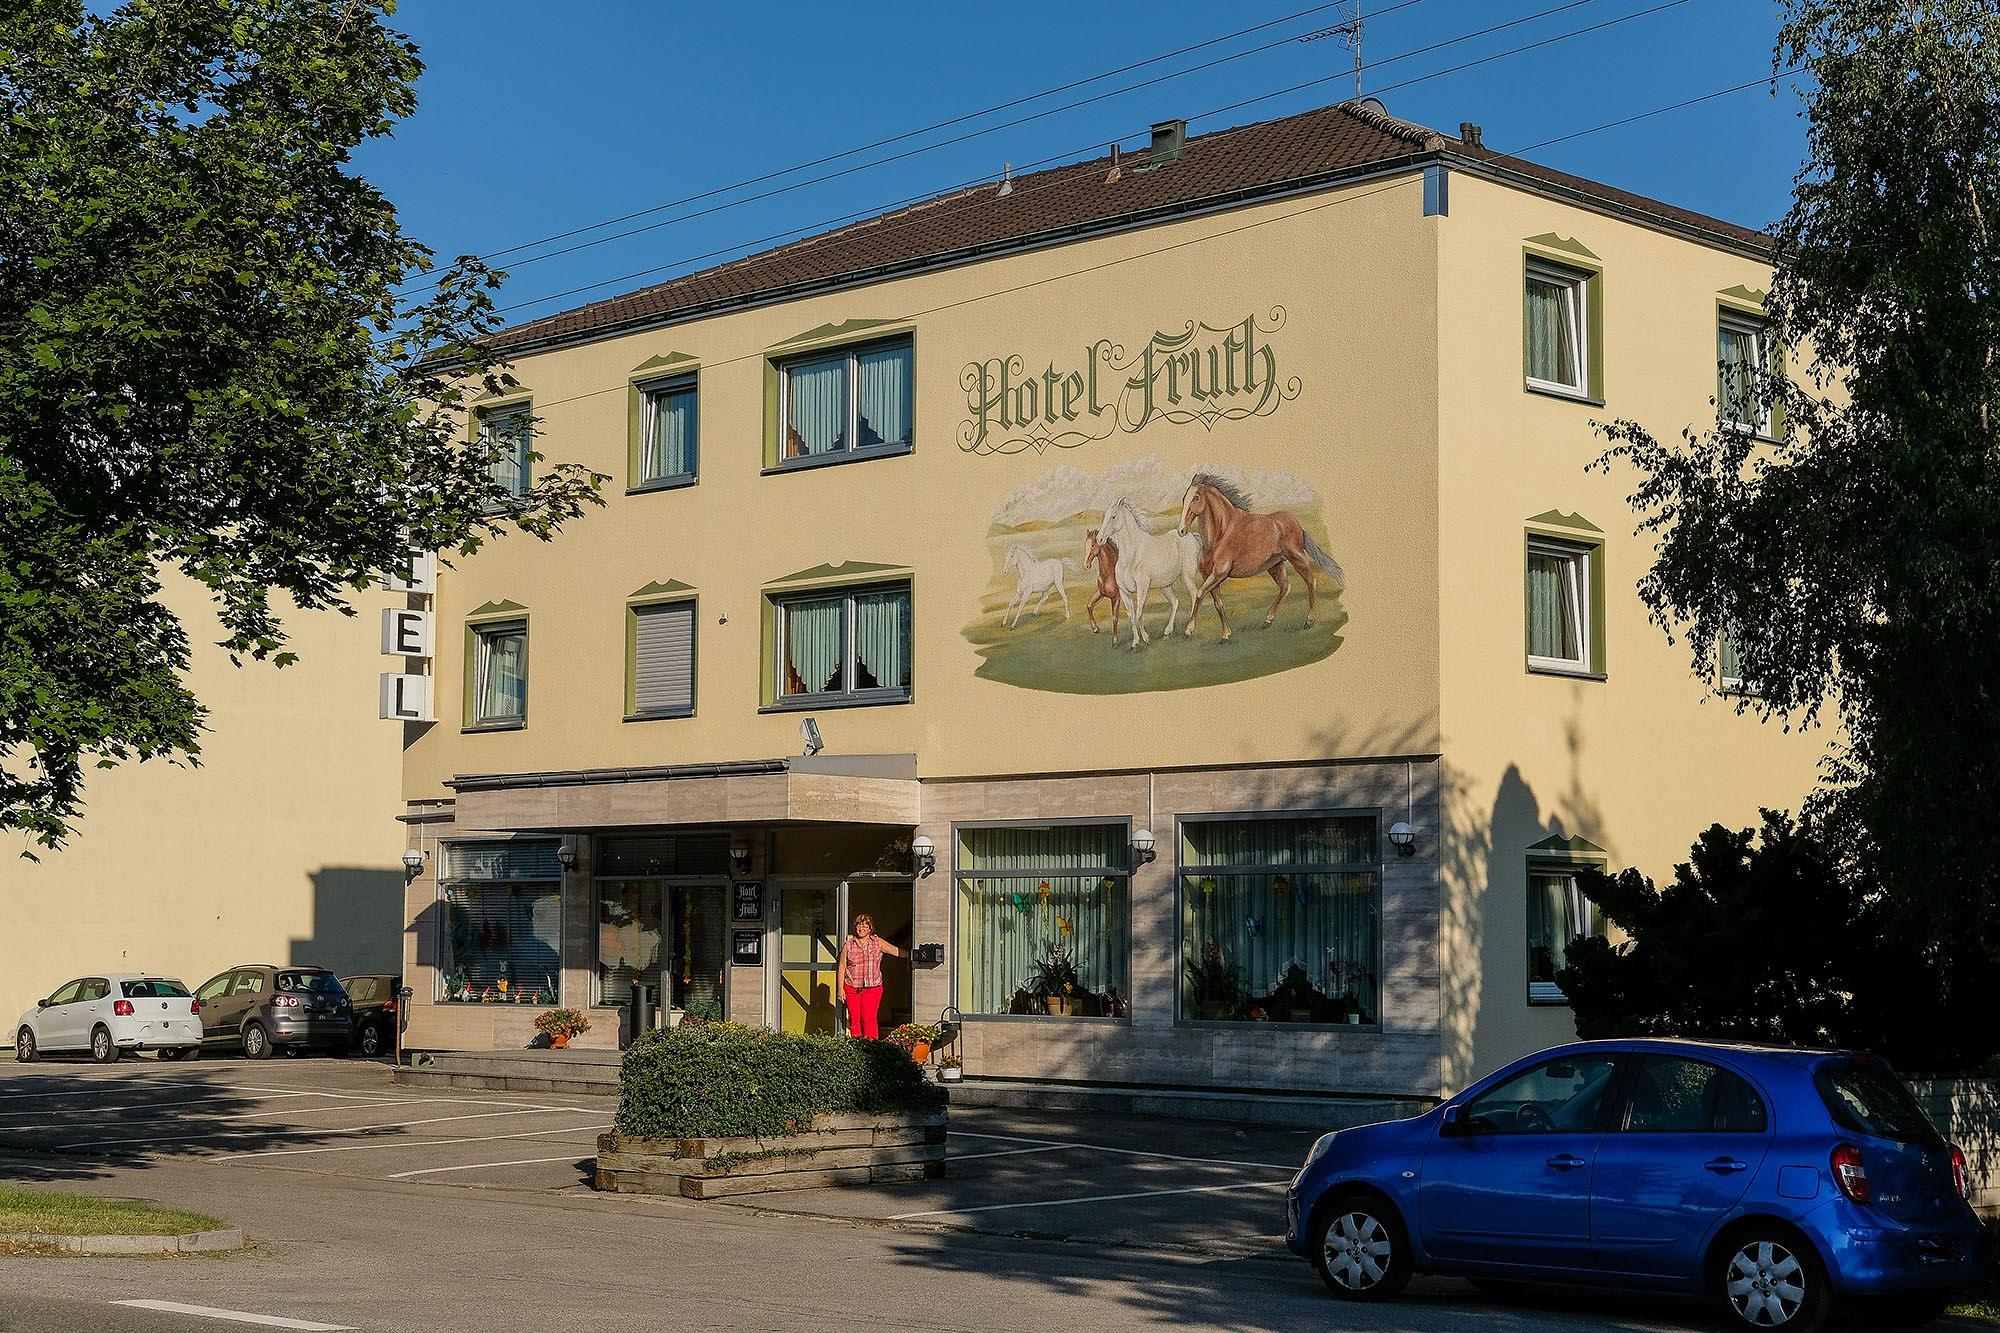 Gabriele Fruth Hotel Fruth, Landsberger Str. 9 in Germering